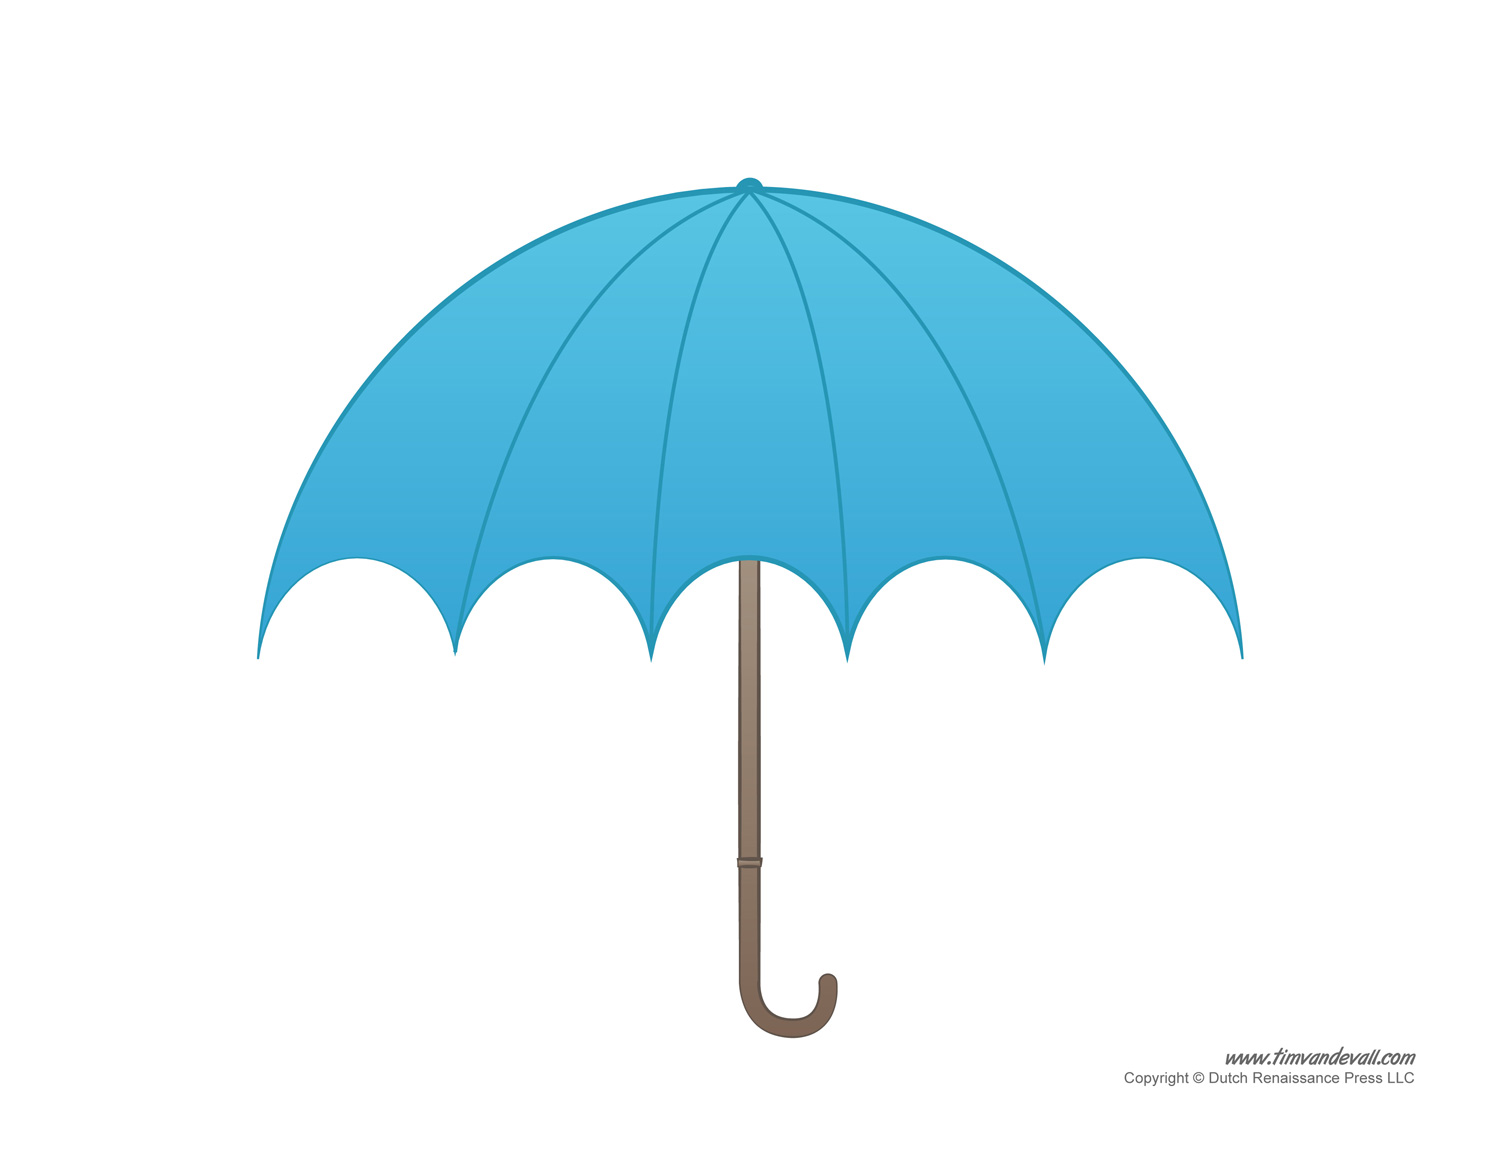 free-umbrella-diagram-template-download-free-umbrella-diagram-template-png-images-free